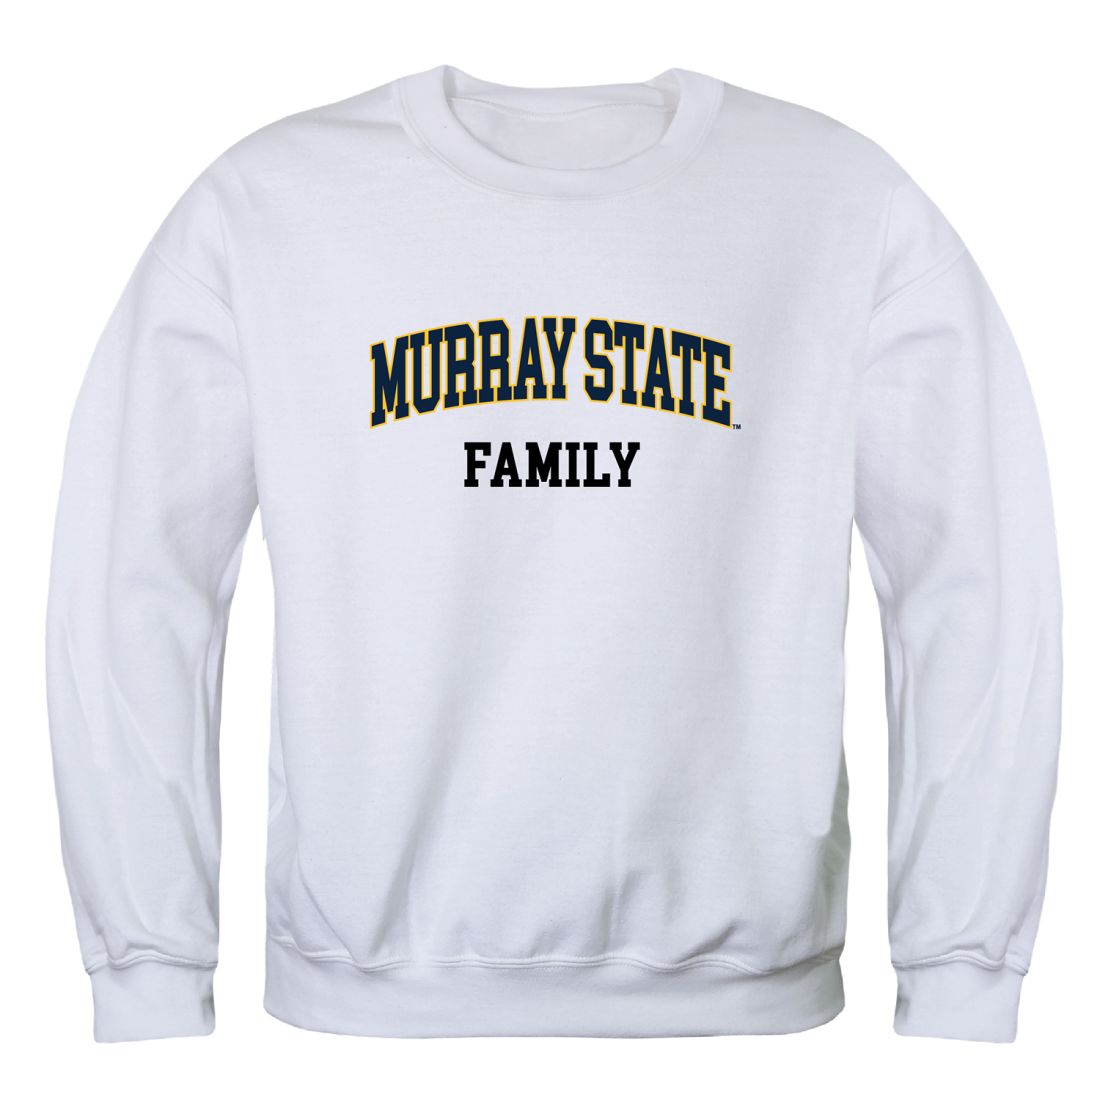 MSU-Murray-State-University-Racers-Family-Fleece-Crewneck-Pullover-Sweatshirt